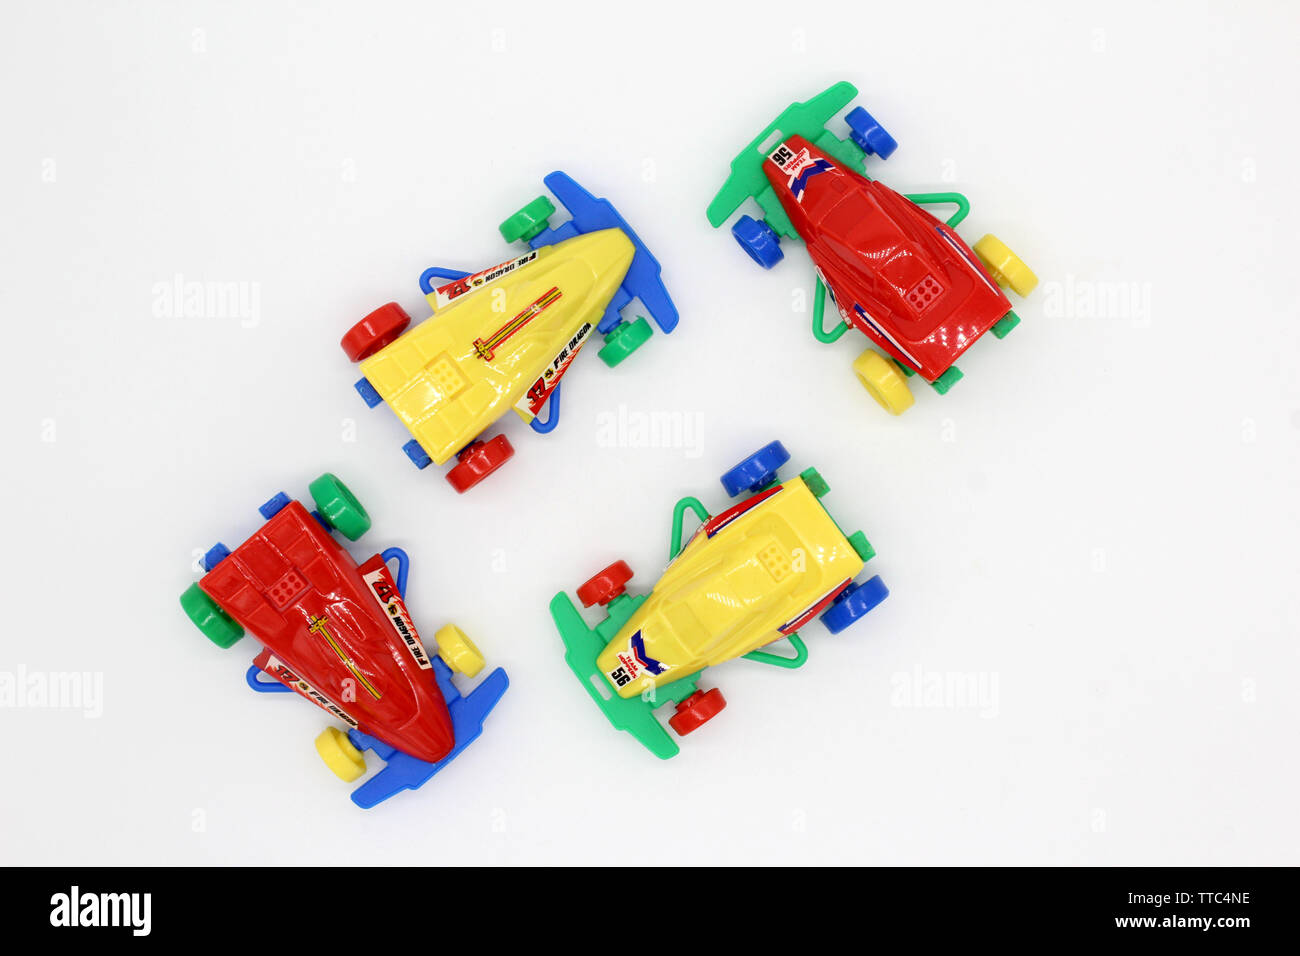 Vintage Plastic Toy Vehicles 